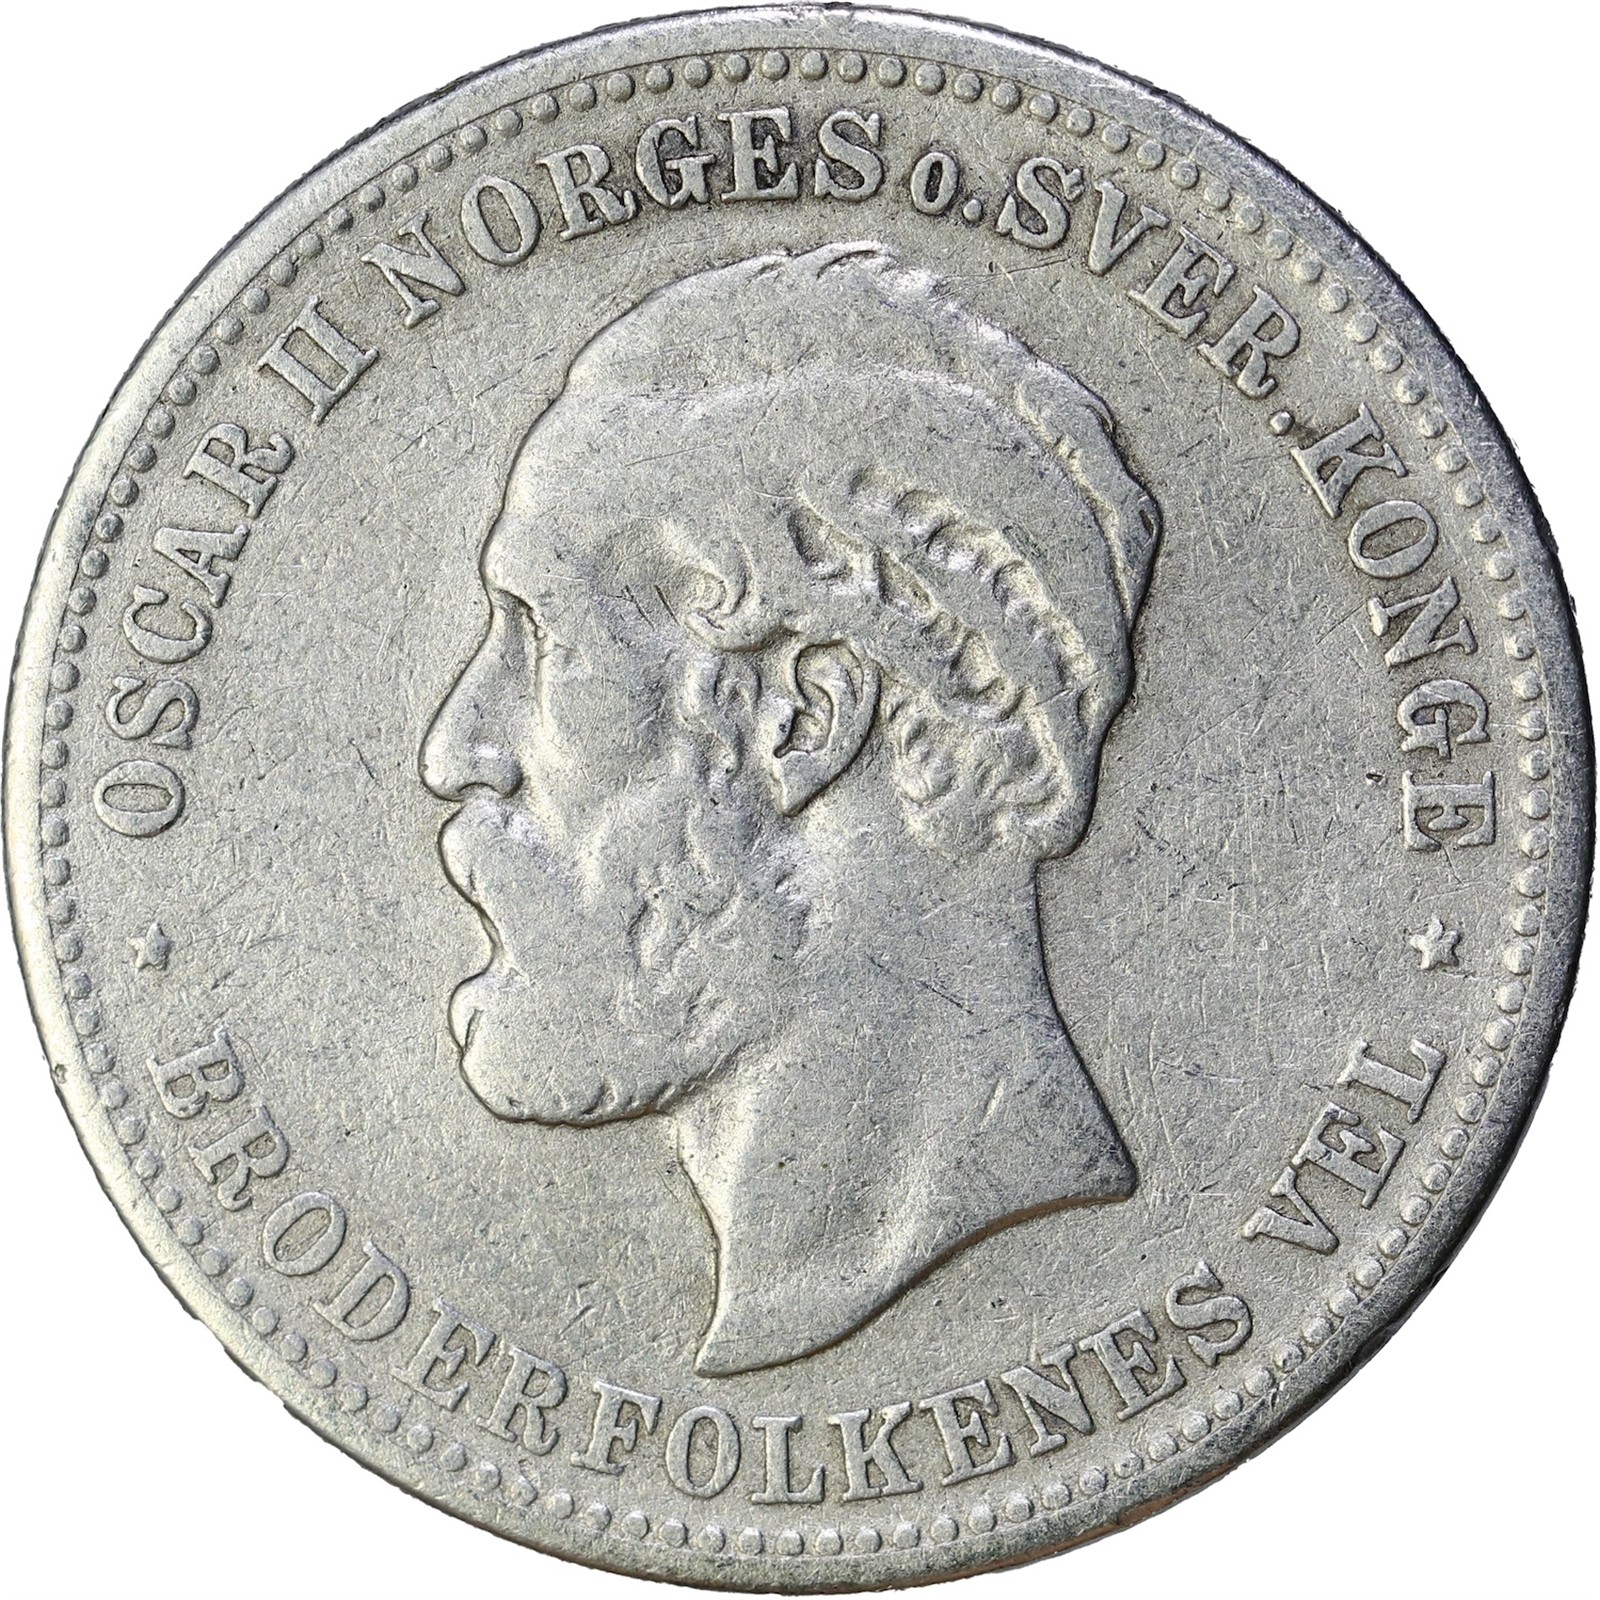 NORWAY. Oscar II. 2 kroner 1885 Kv 1 (F)